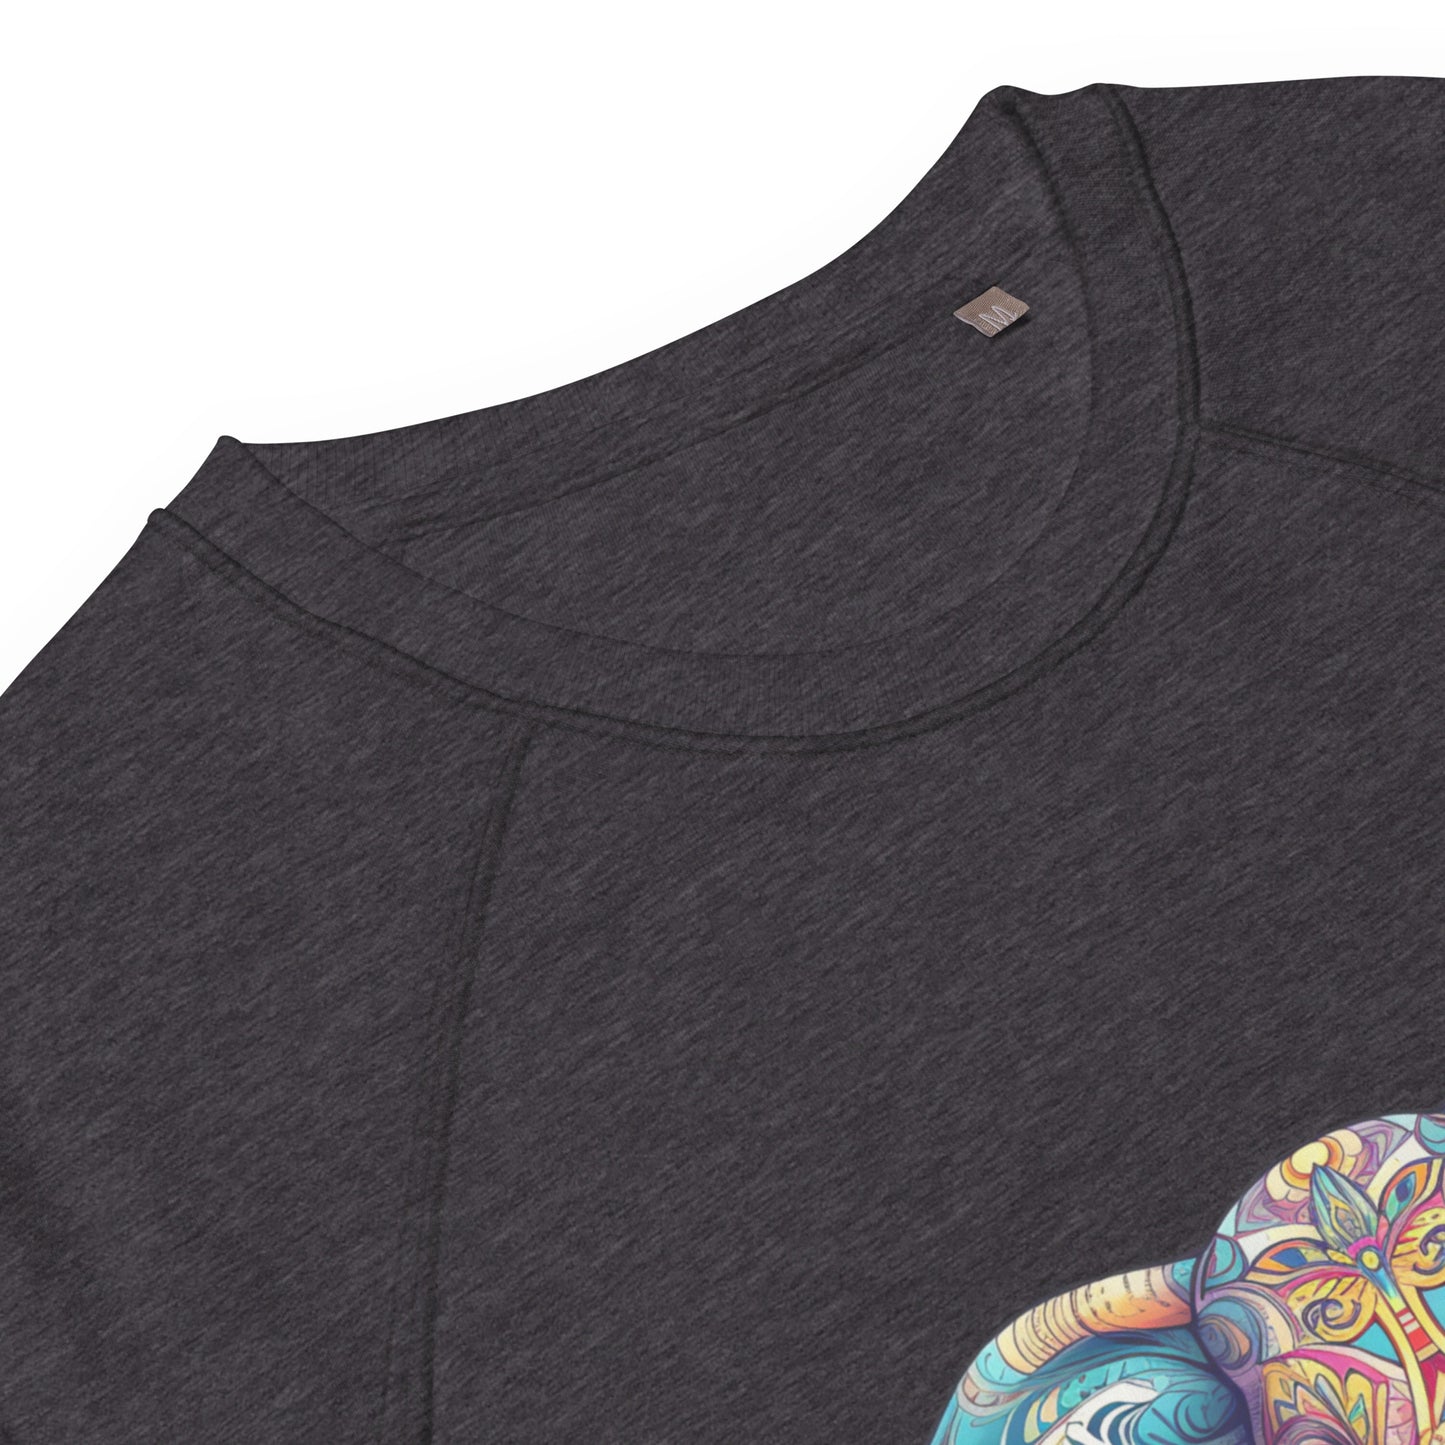 Unisex organic sweatshirt/Coloful-Elephant